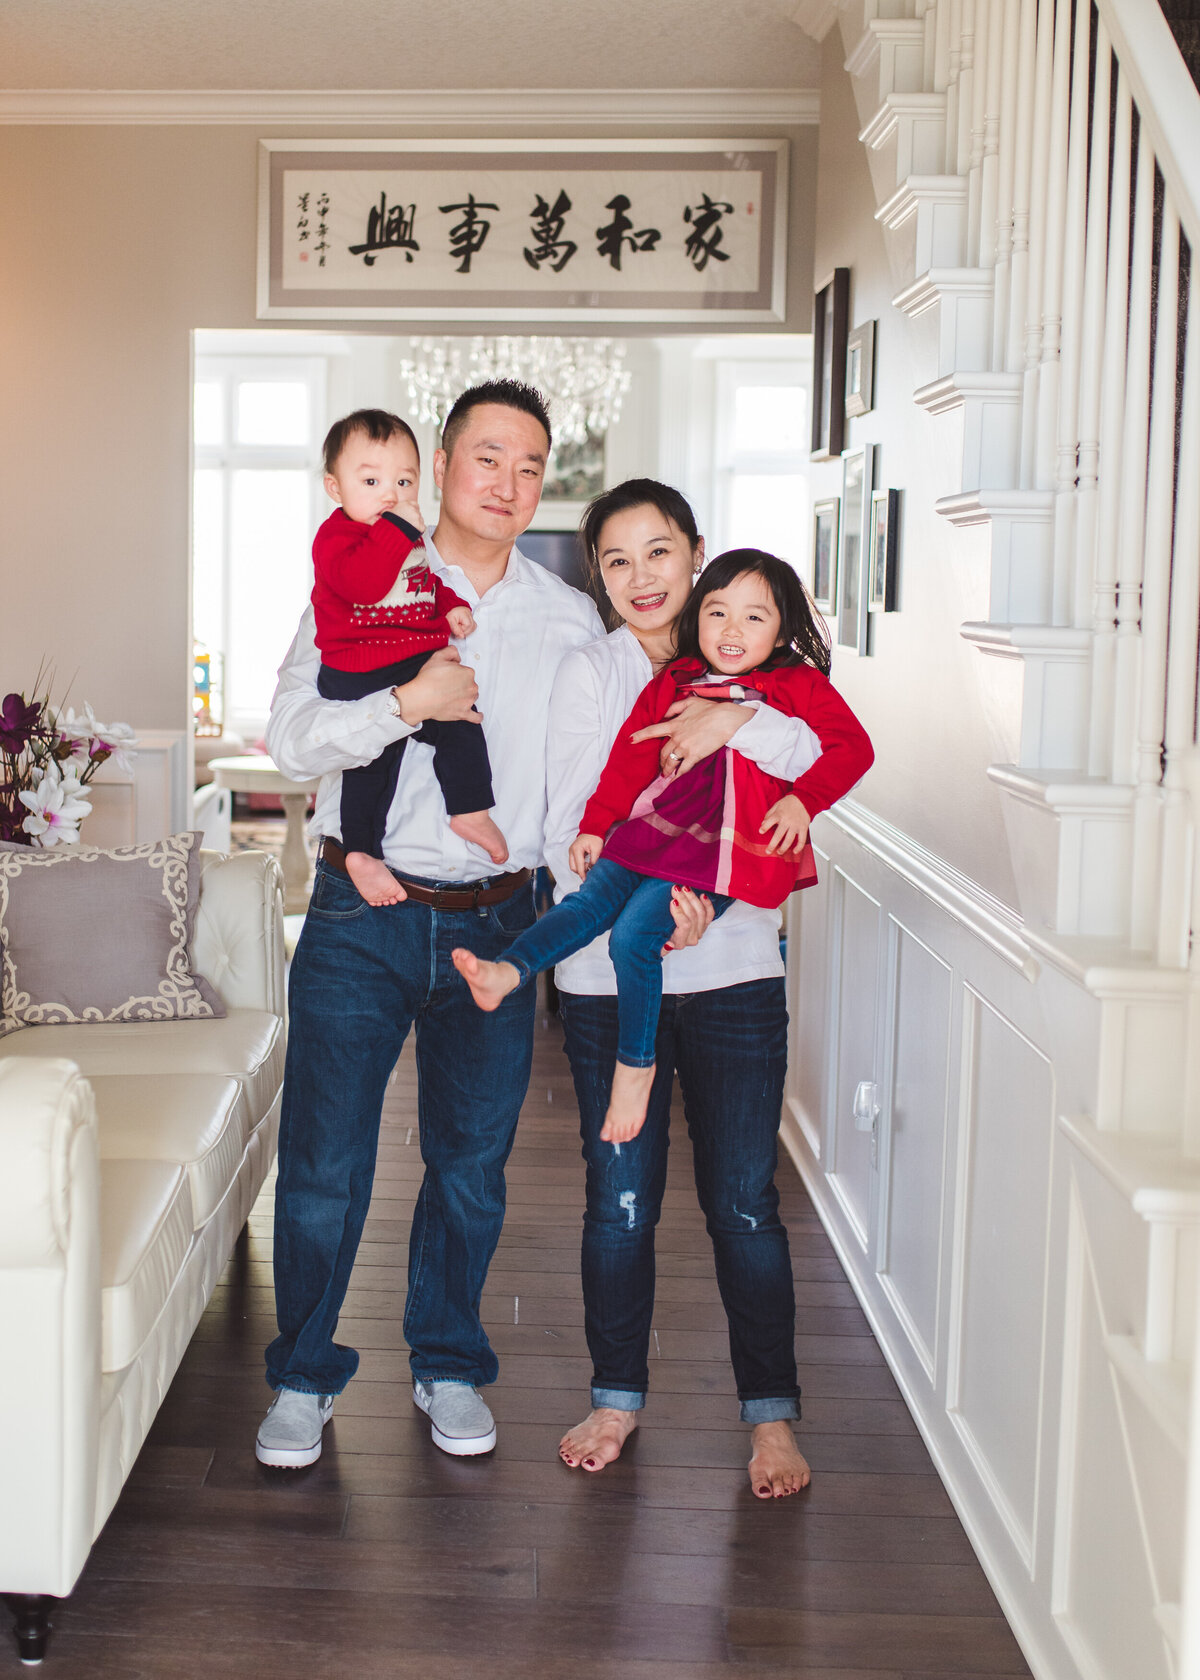 Des-Moines-Iowa-Family-Photographer-Theresa-Schumacher-Photography-Asian-Family-House